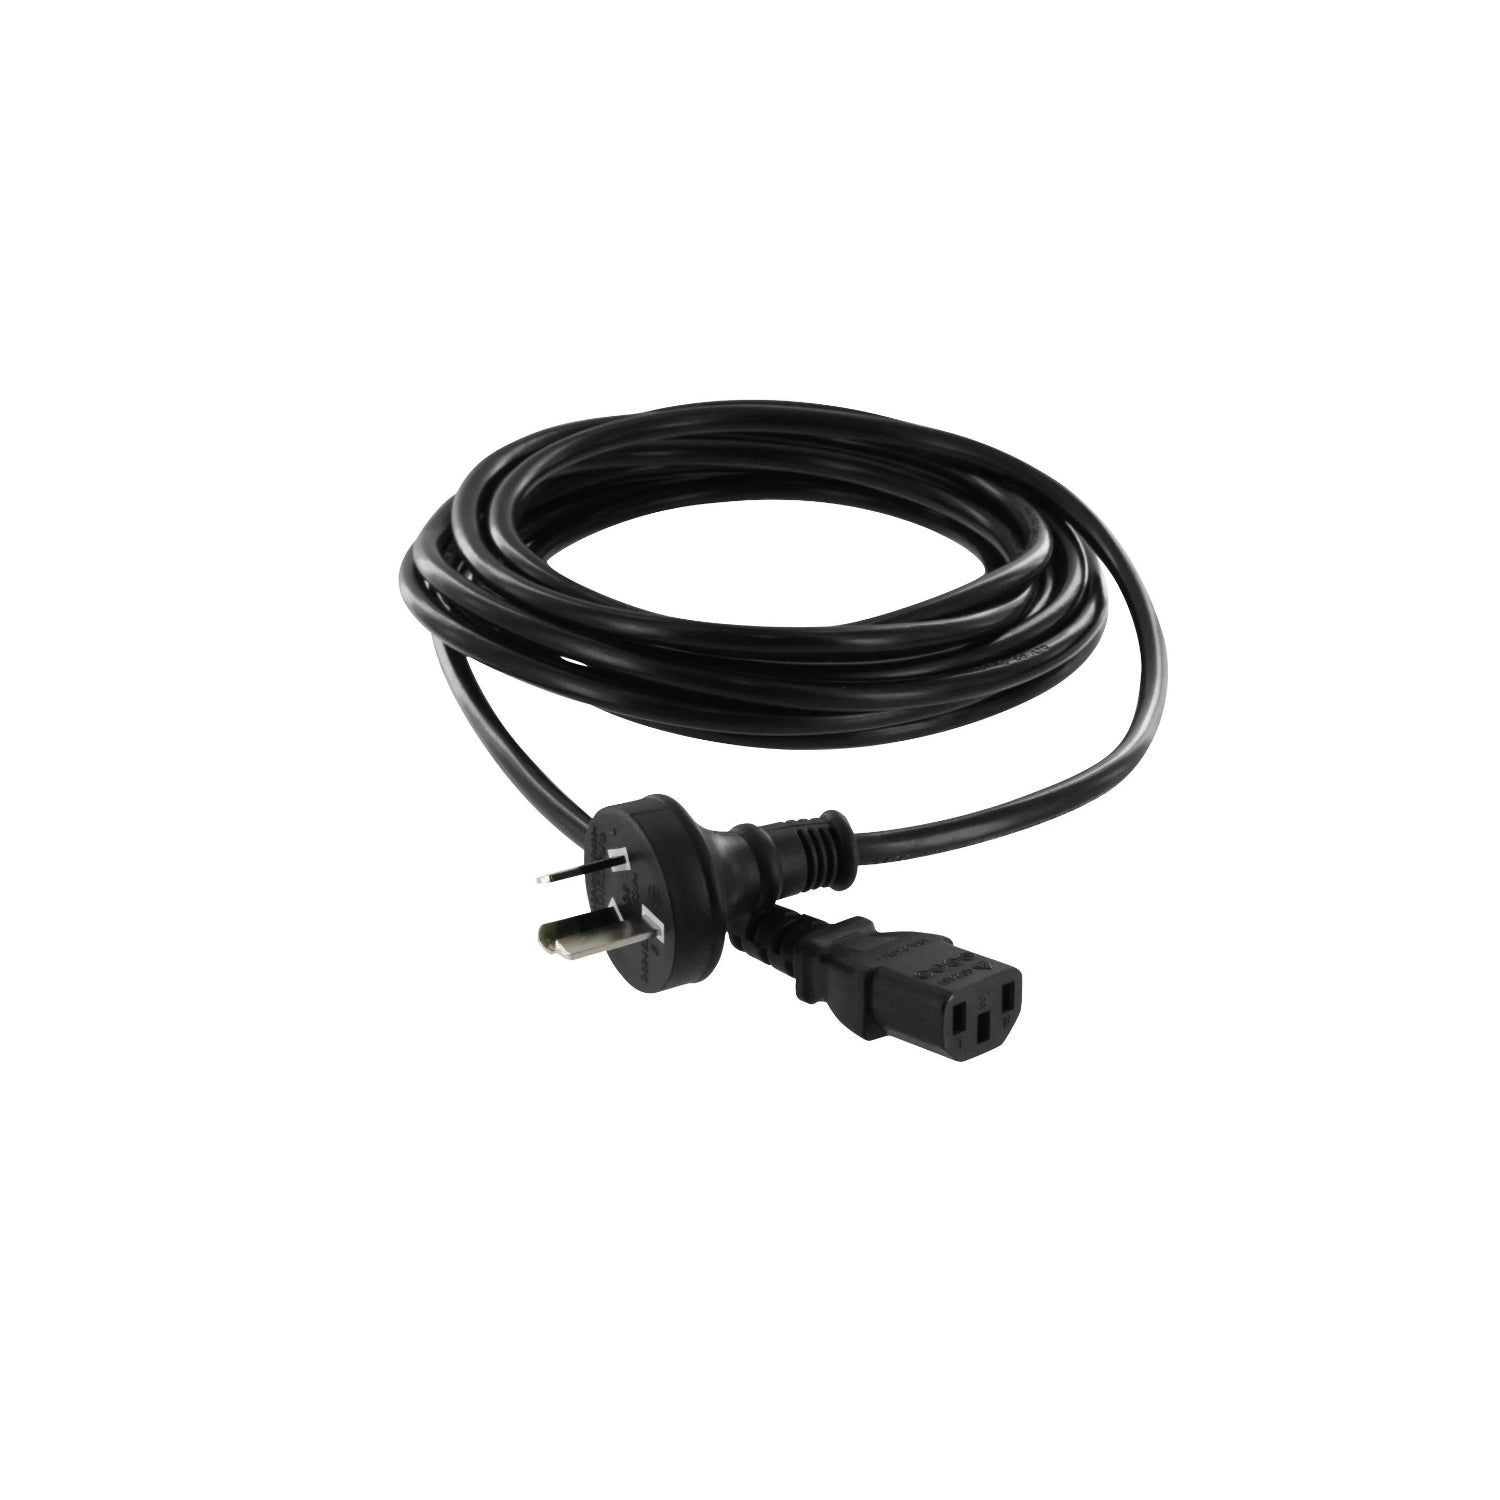 Mains Power Cable (240V) - Karaoke Home Entertainment